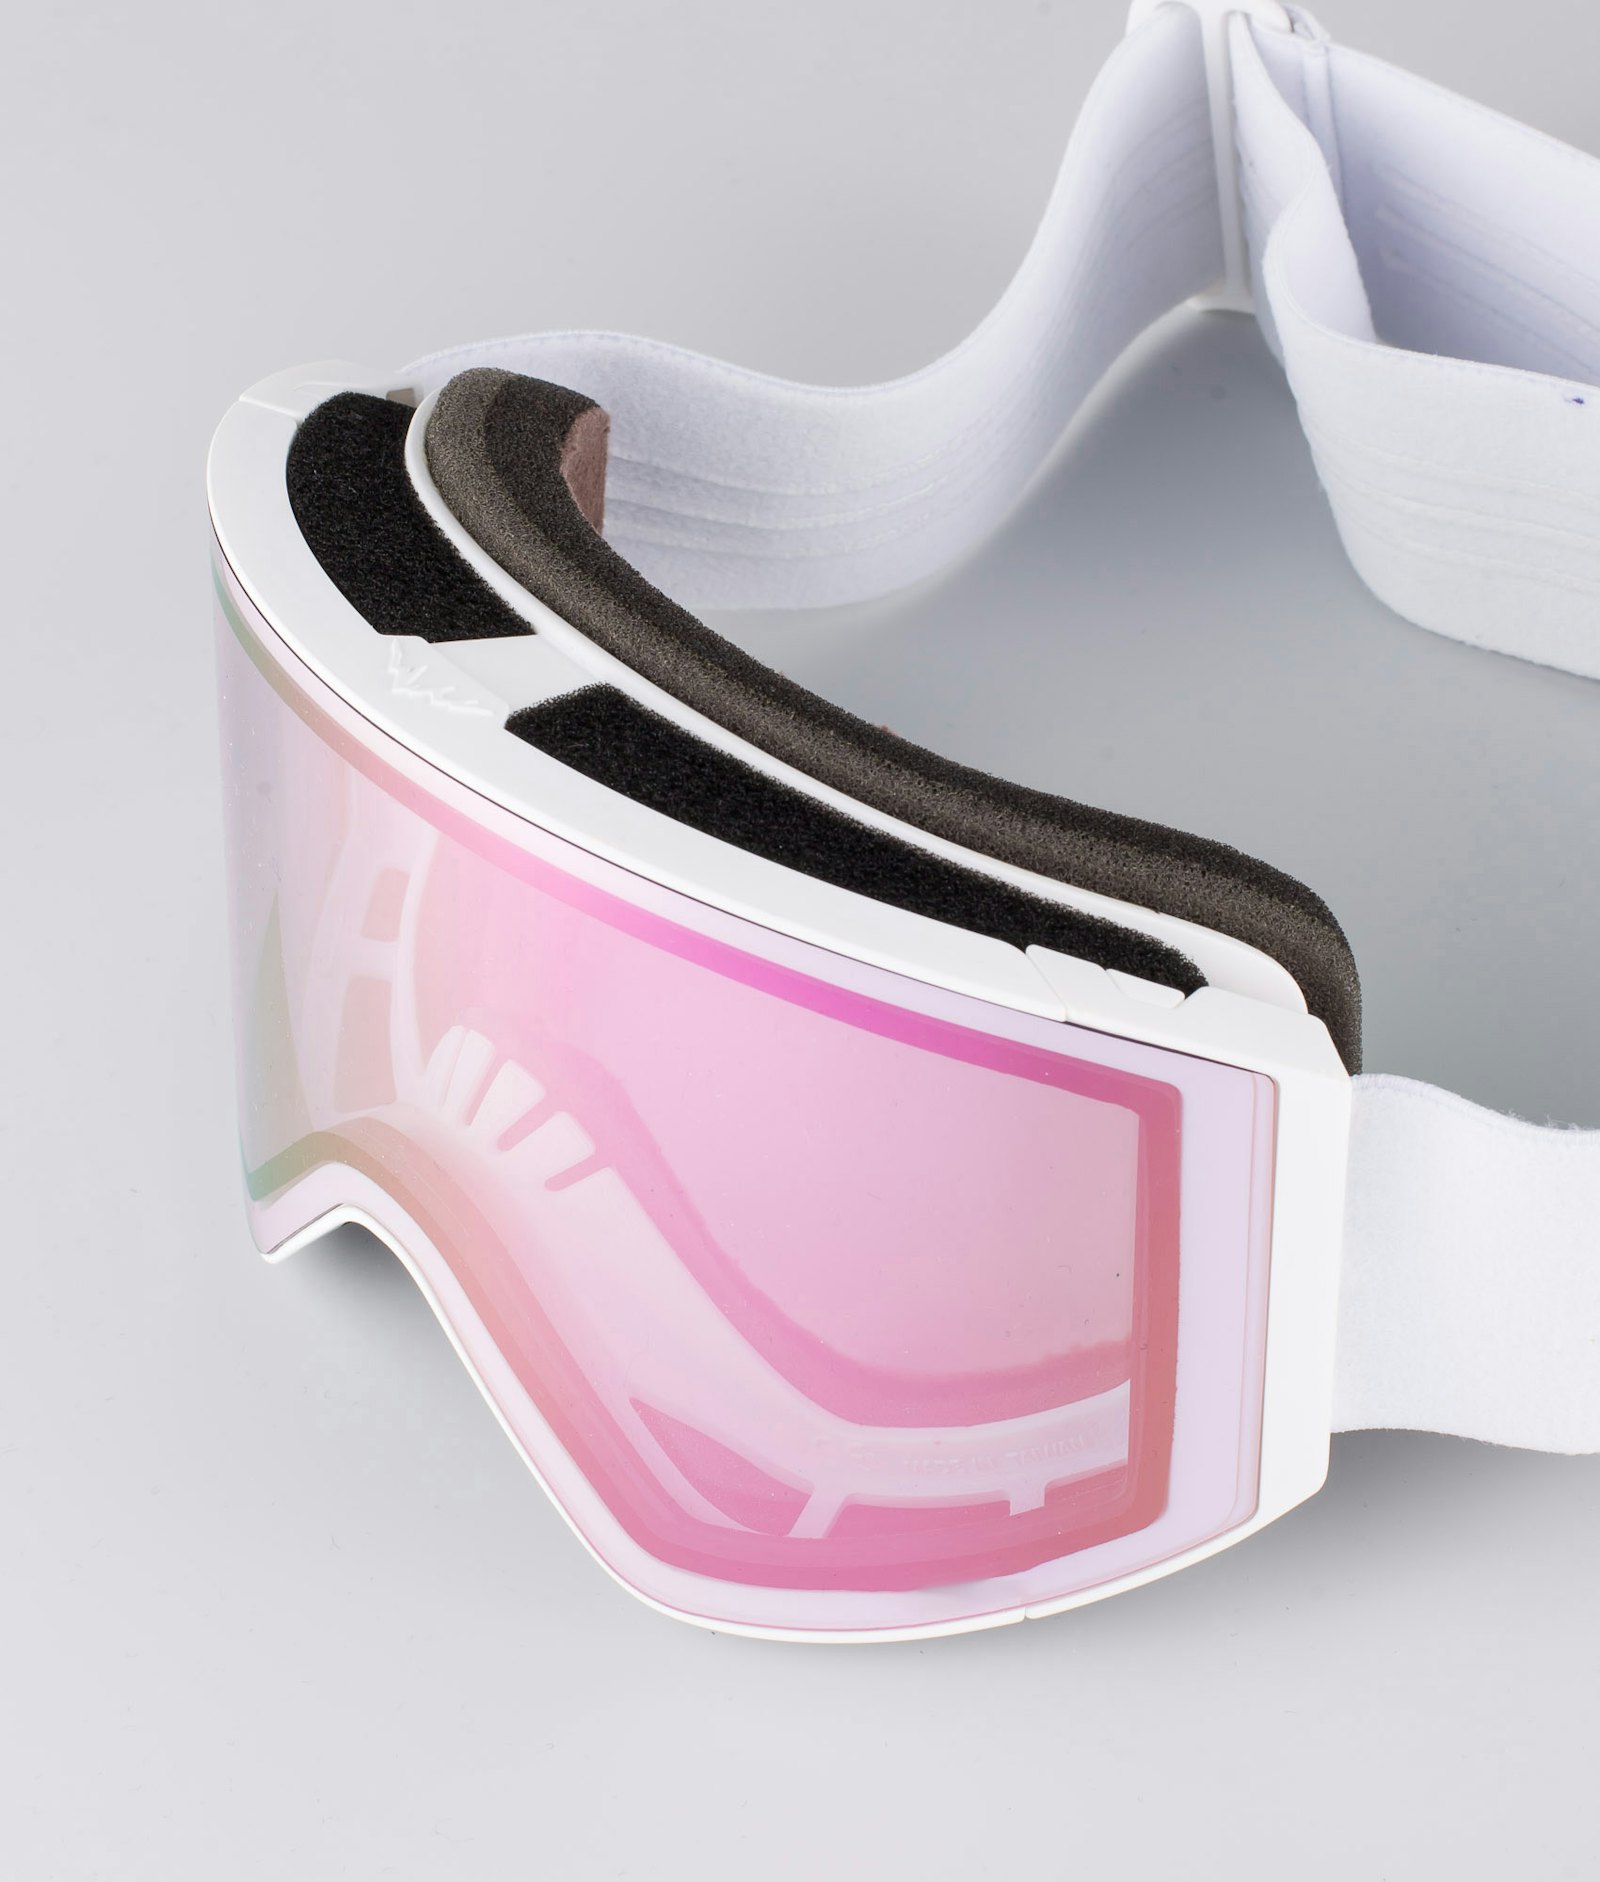 Montec Scope 2020 Large Skibriller White/Pink Sapphire